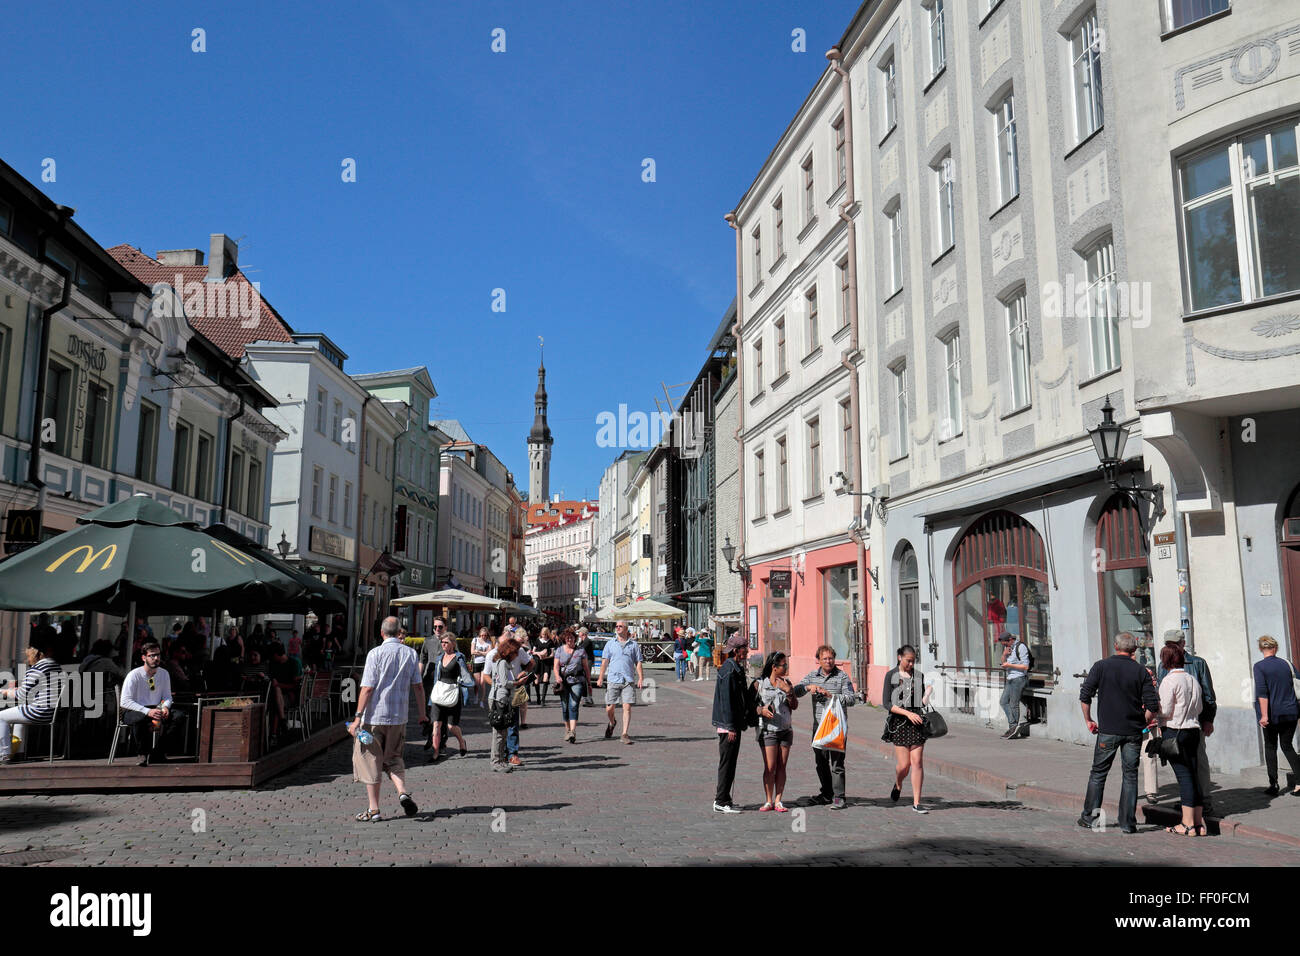 General street view (looking up Viru) of a shopping street in Tallinn, Estonia (the distant tower belongs to Tallinn Town Hall). Stock Photo